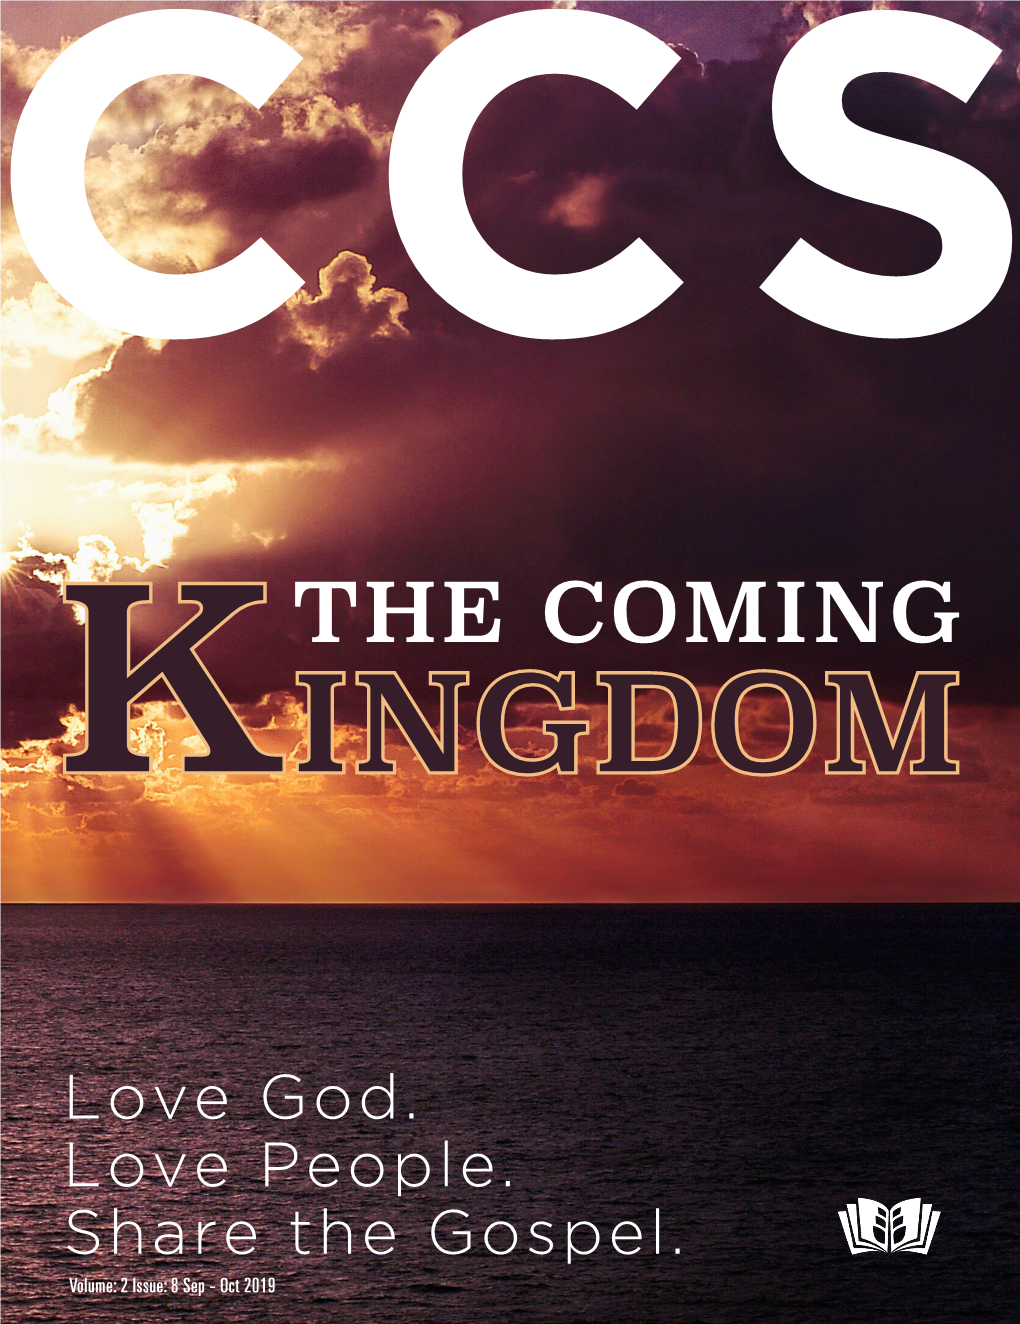 THE COMING Kingdom